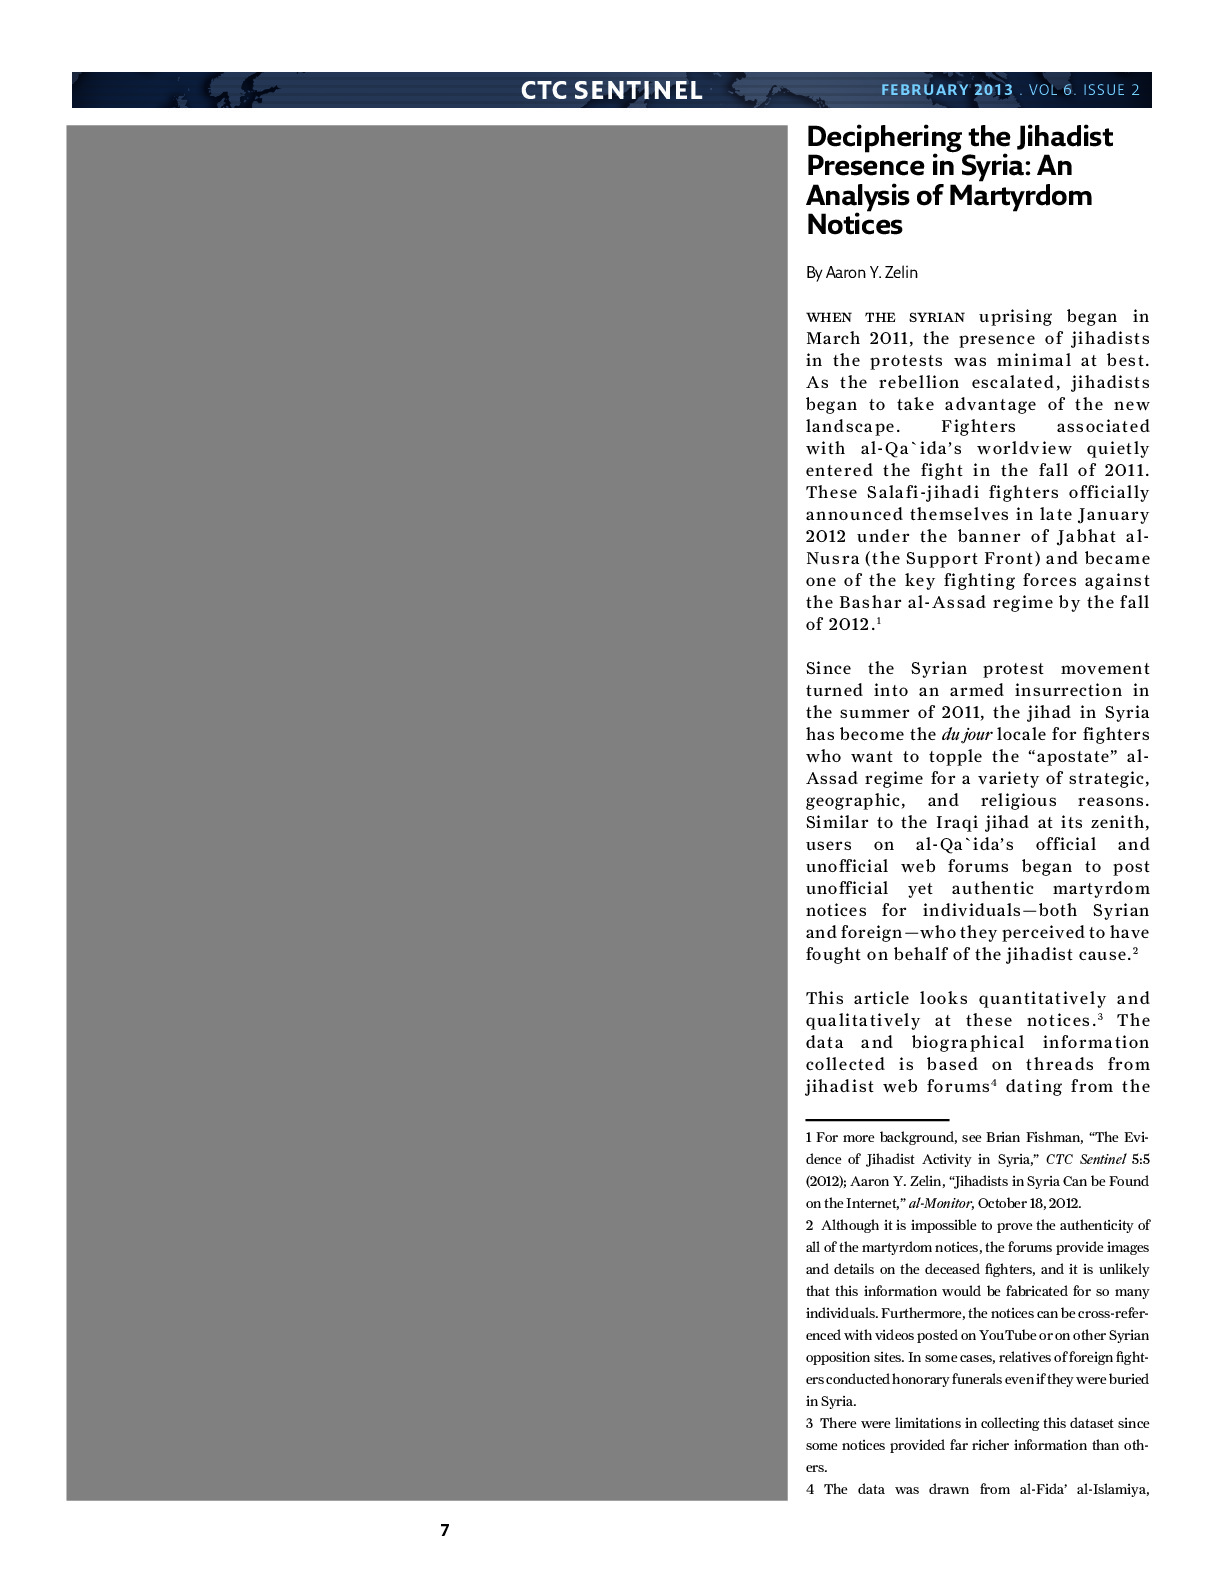 Zelin20130220-CTCSentinel.pdf